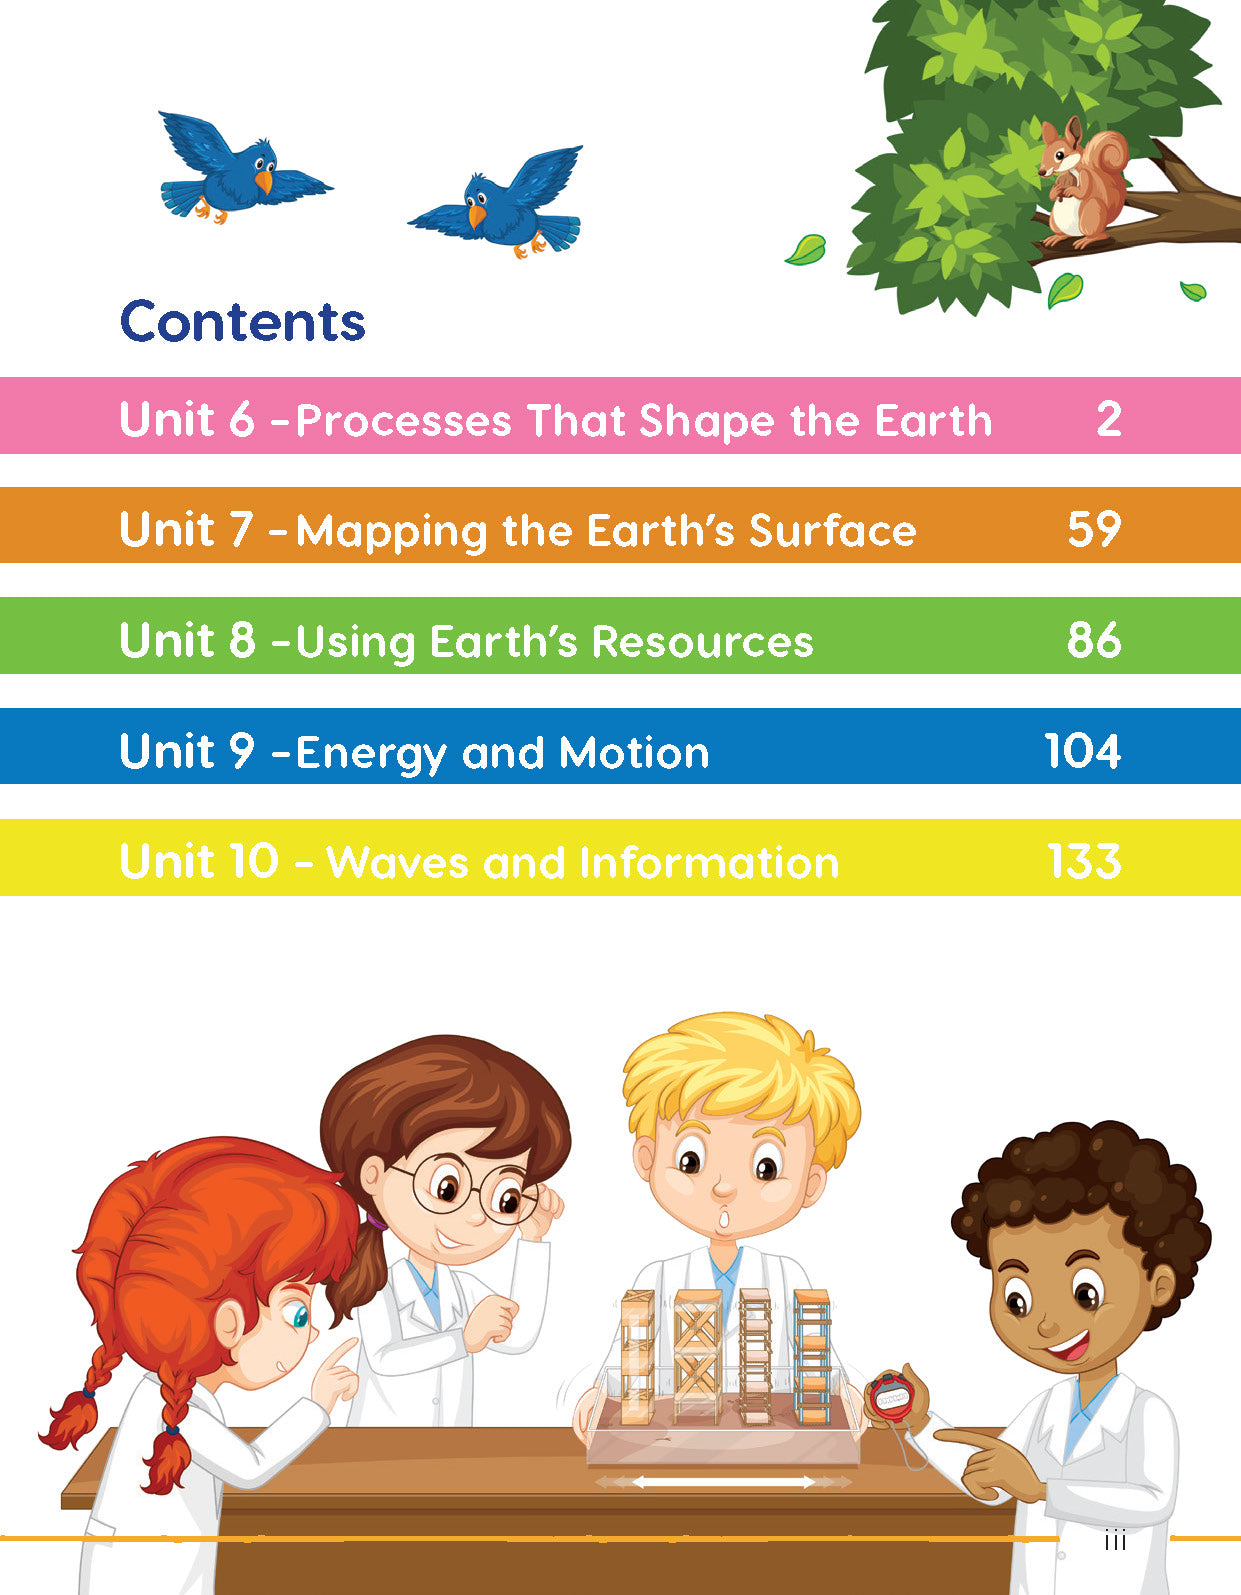 Next Generation Science Activity Book – Grade 4, Book B